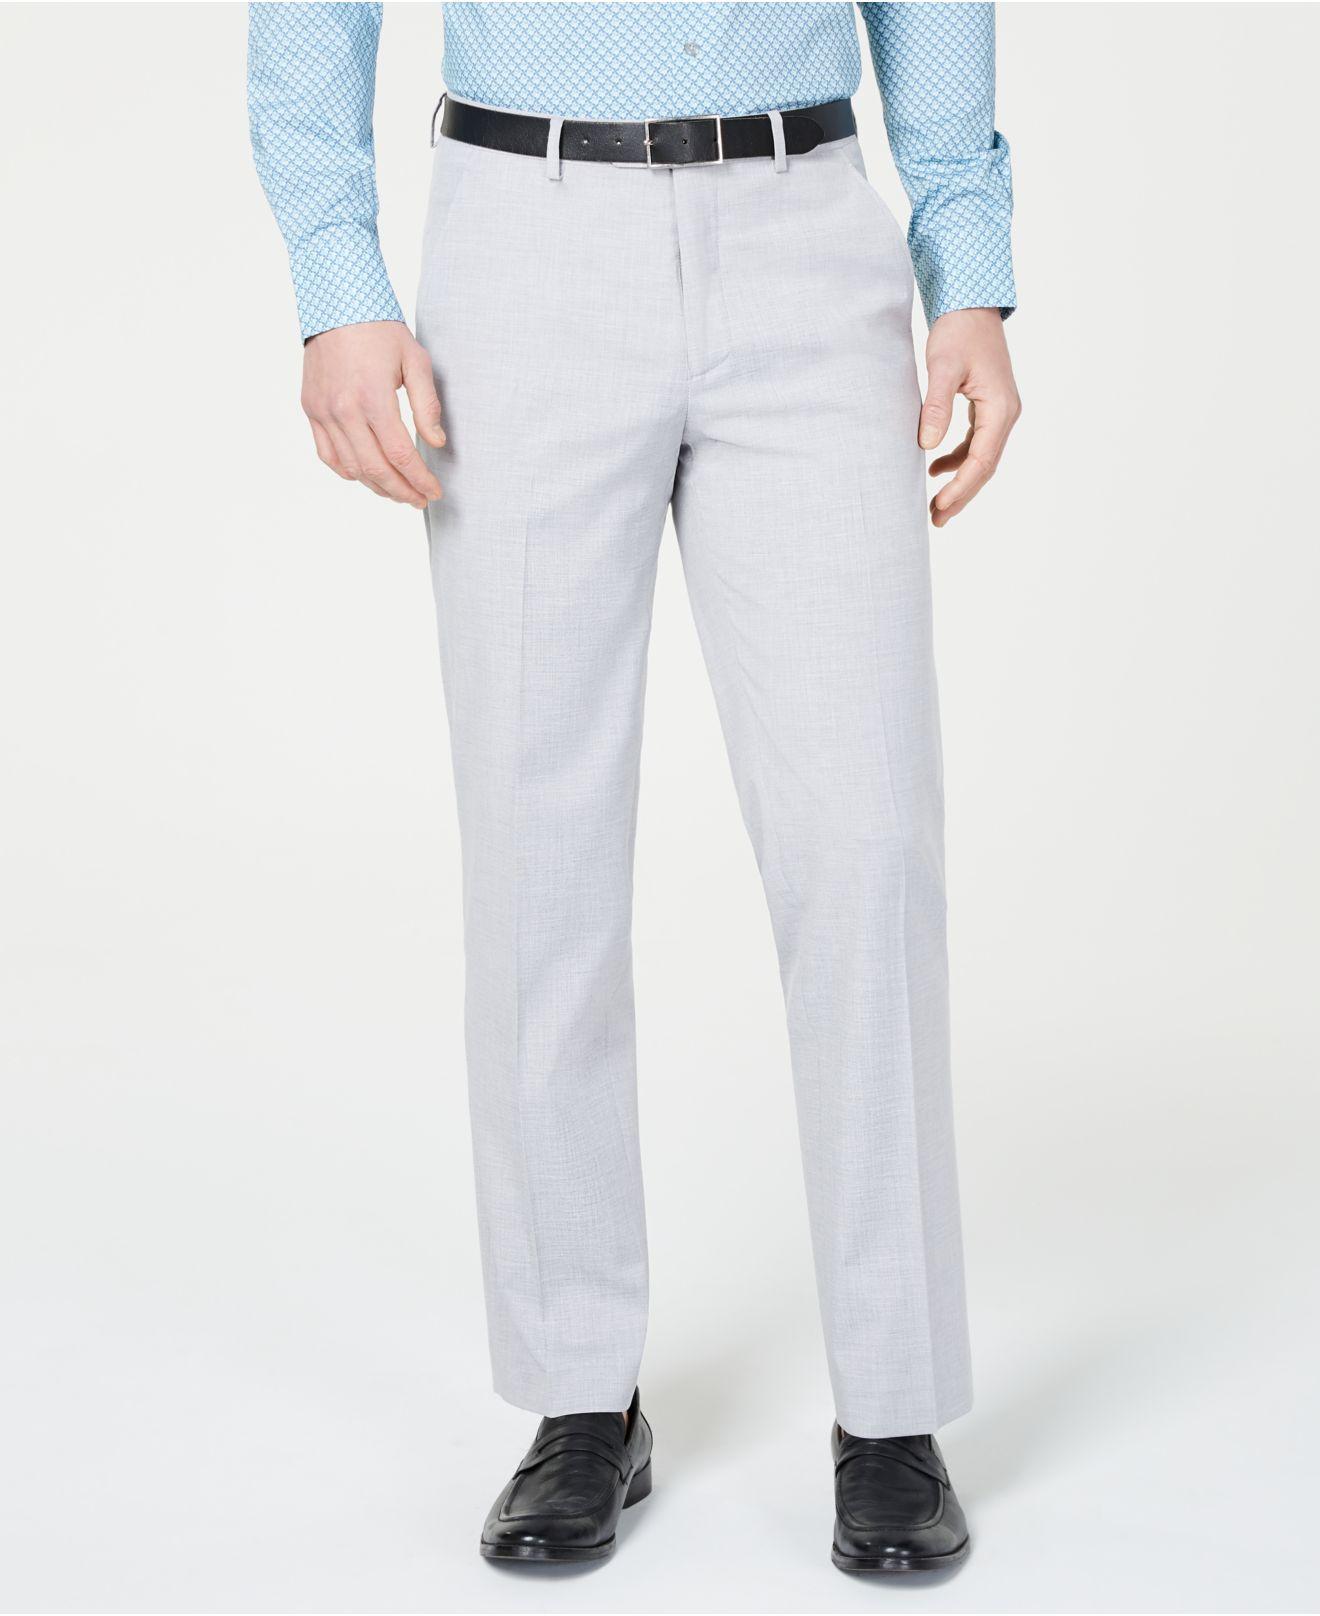 Lyst - Alfani Slim-fit Performance Stretch Light Gray Suit Pants ...